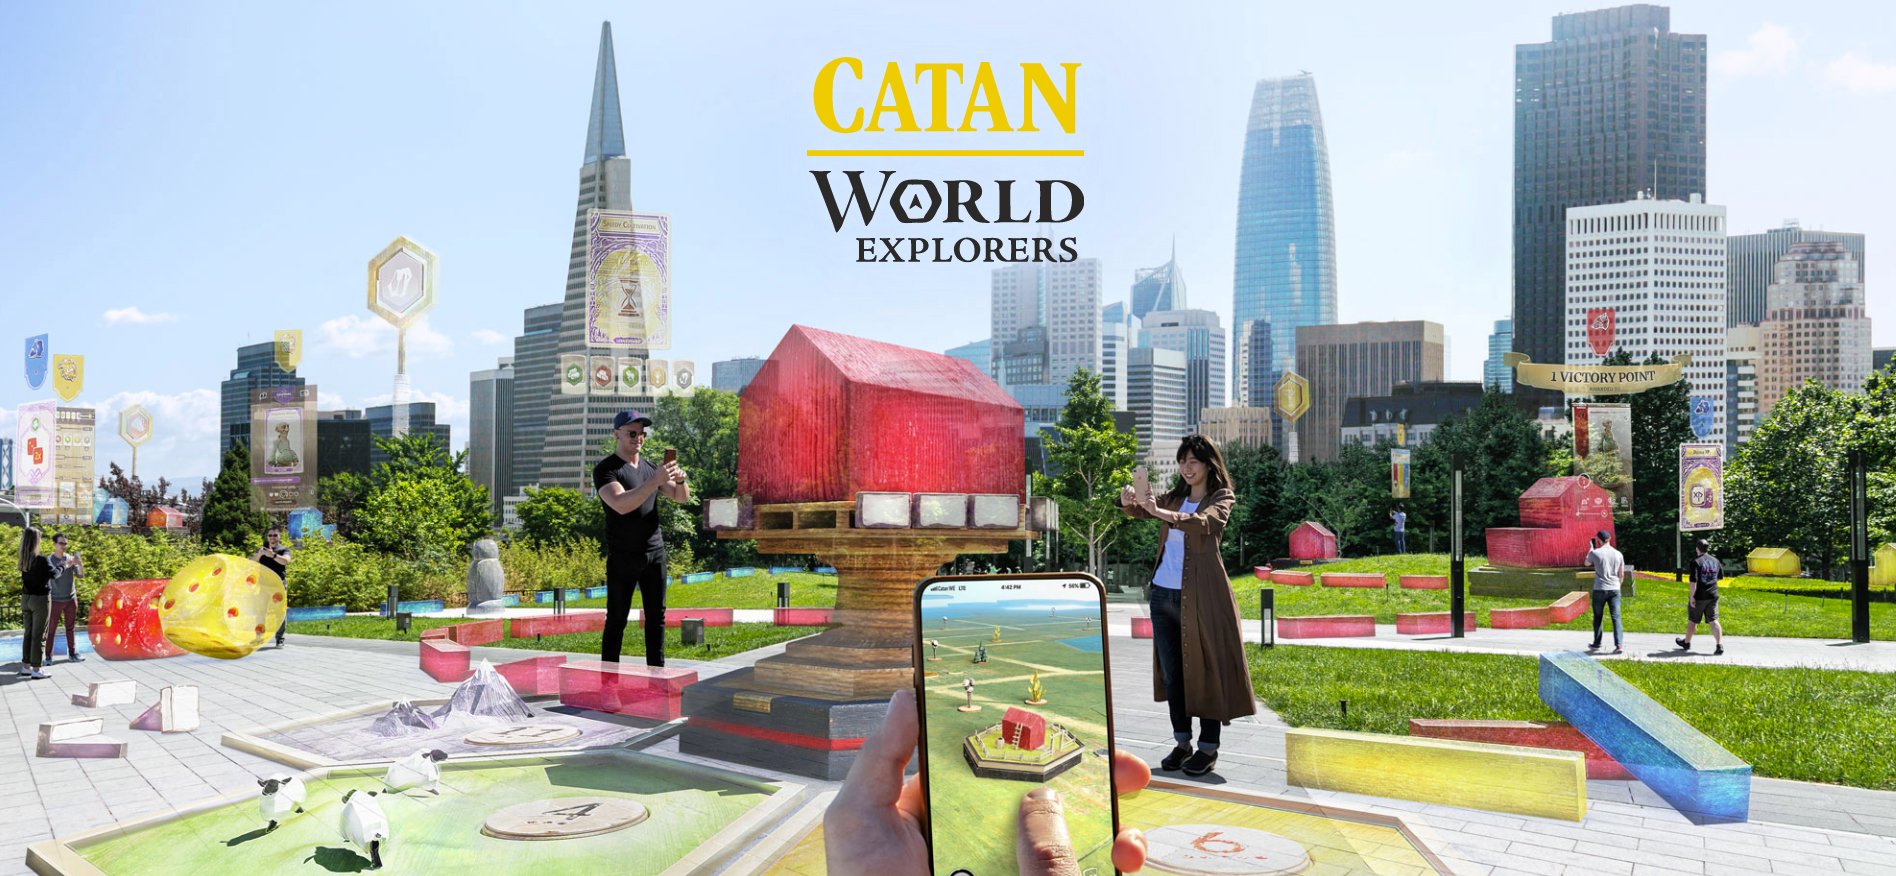 catan-world-explorers-pokemon-go-niantic.jpg